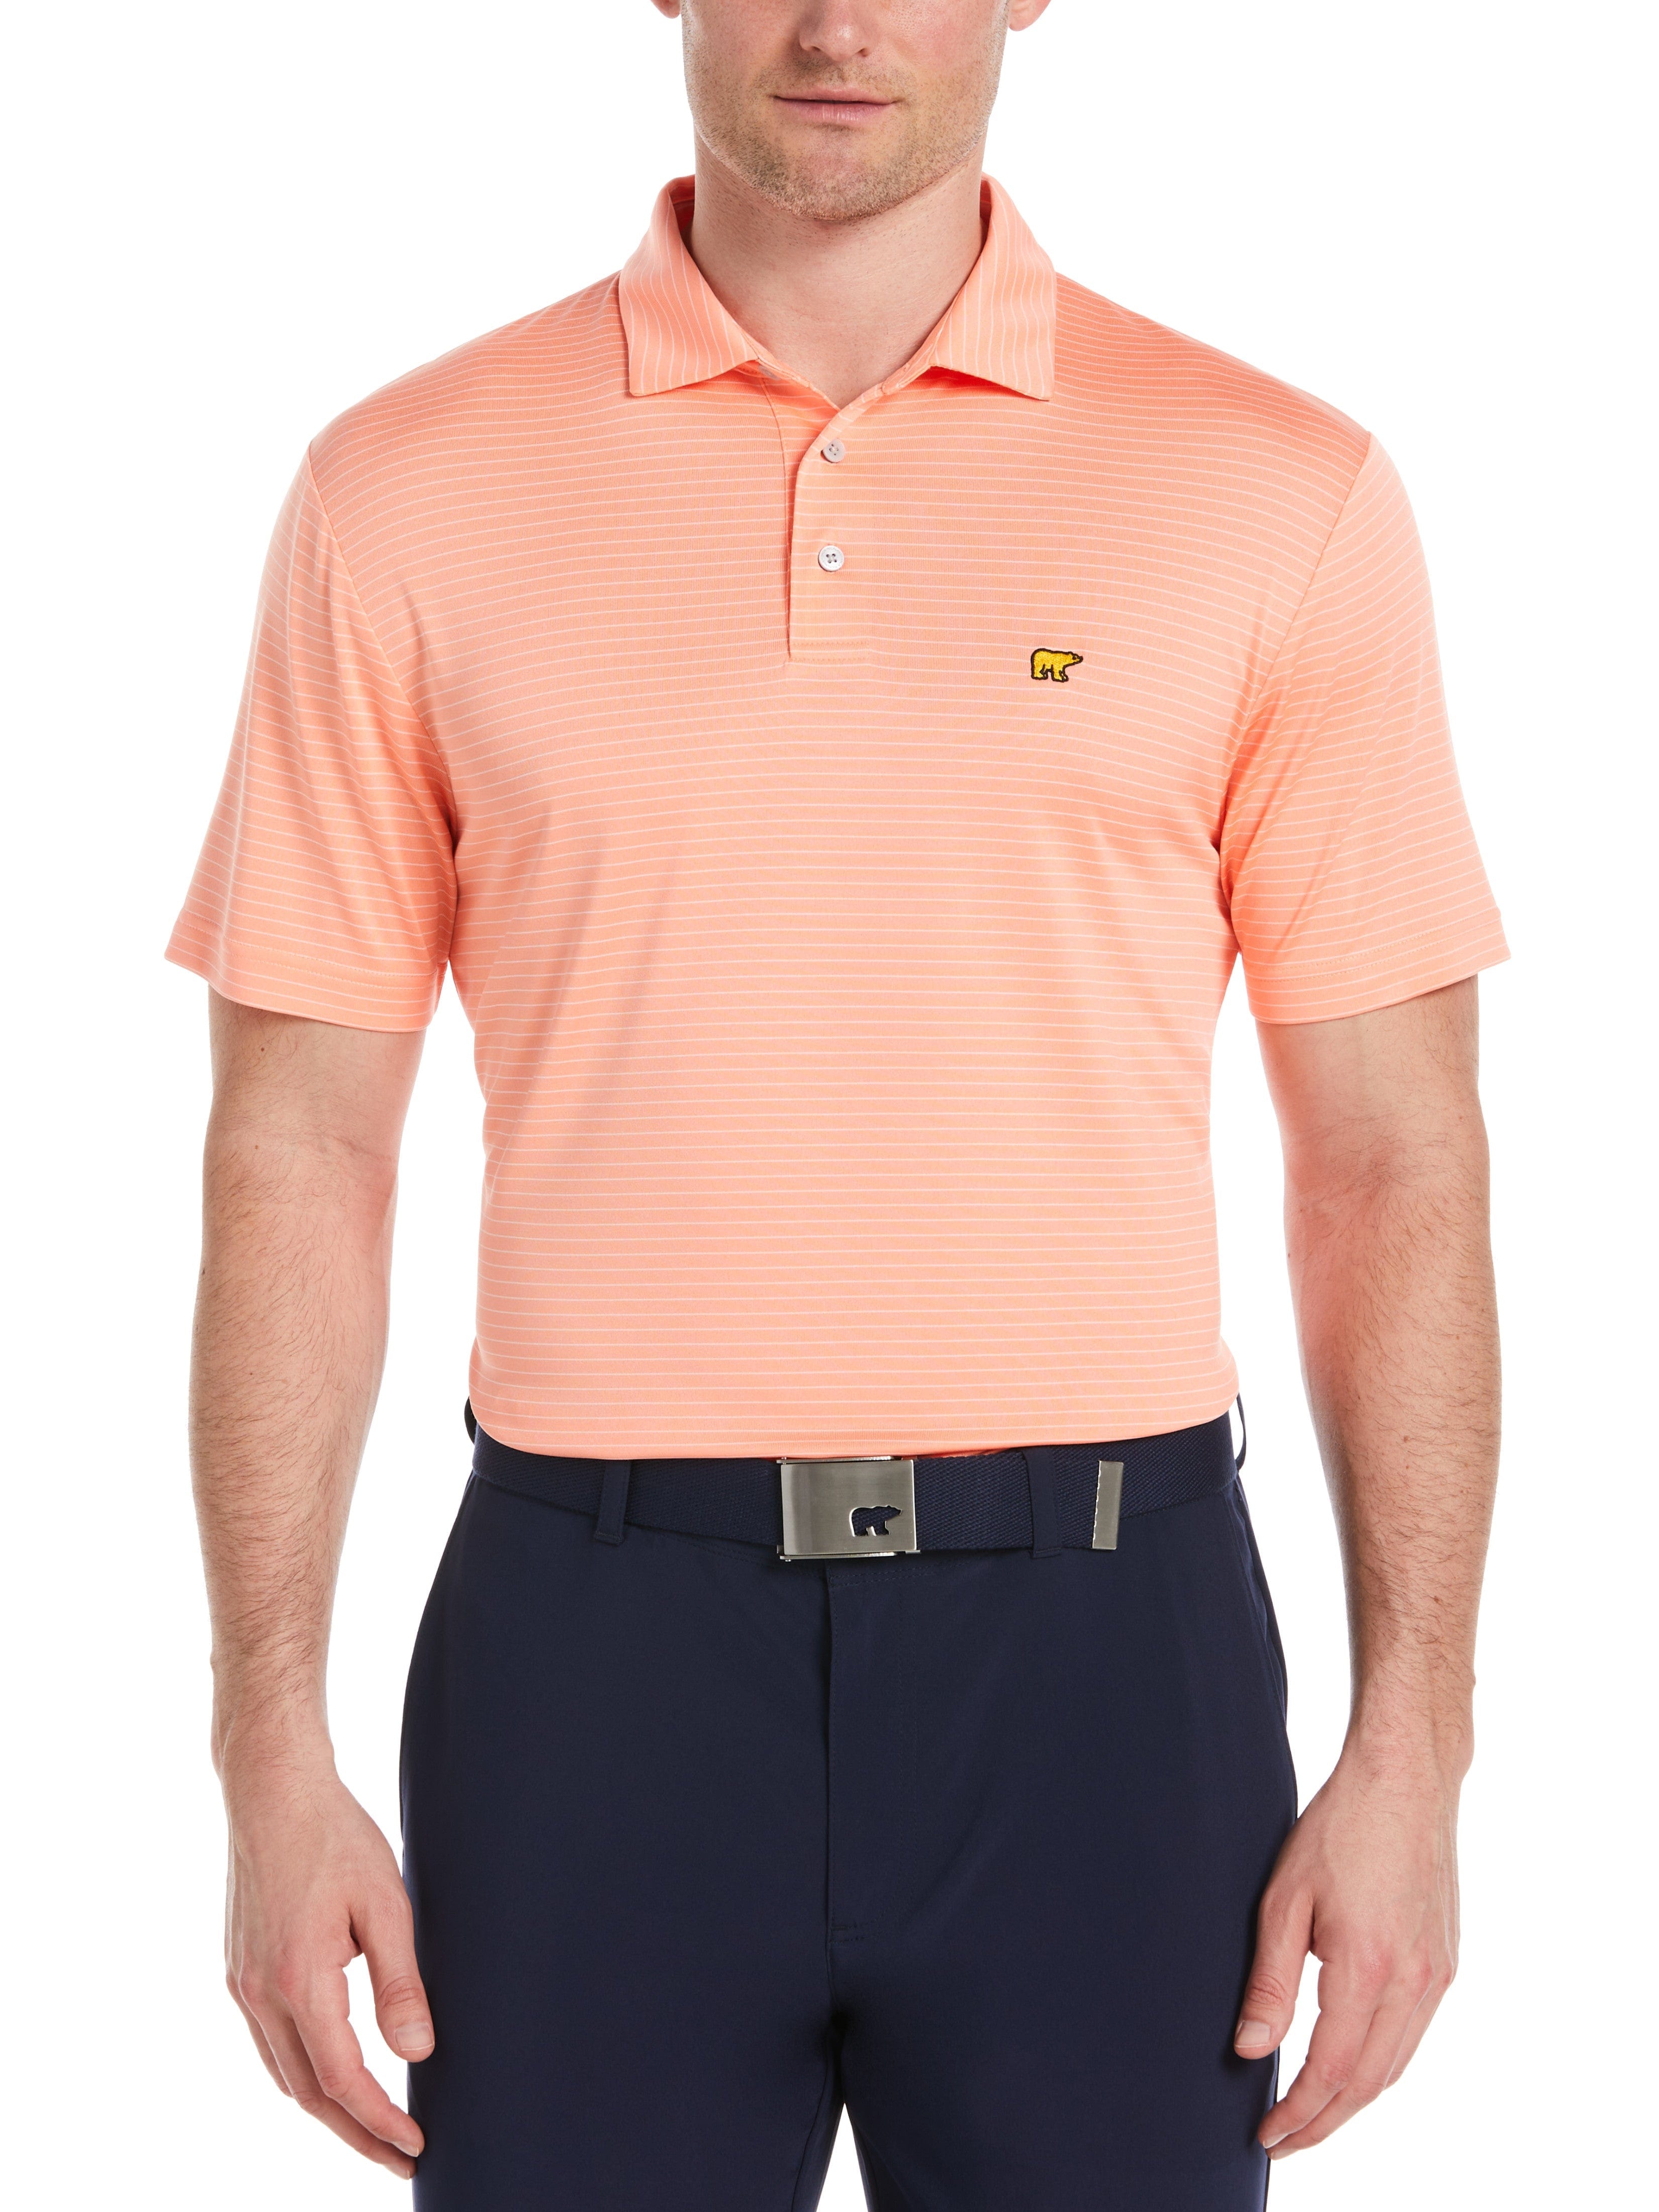 Jack Nicklaus Mens Two Color Stripe Golf Polo Shirt, Size 2XL, Desert Flower Pink, 100% Polyester | Golf Apparel Shop